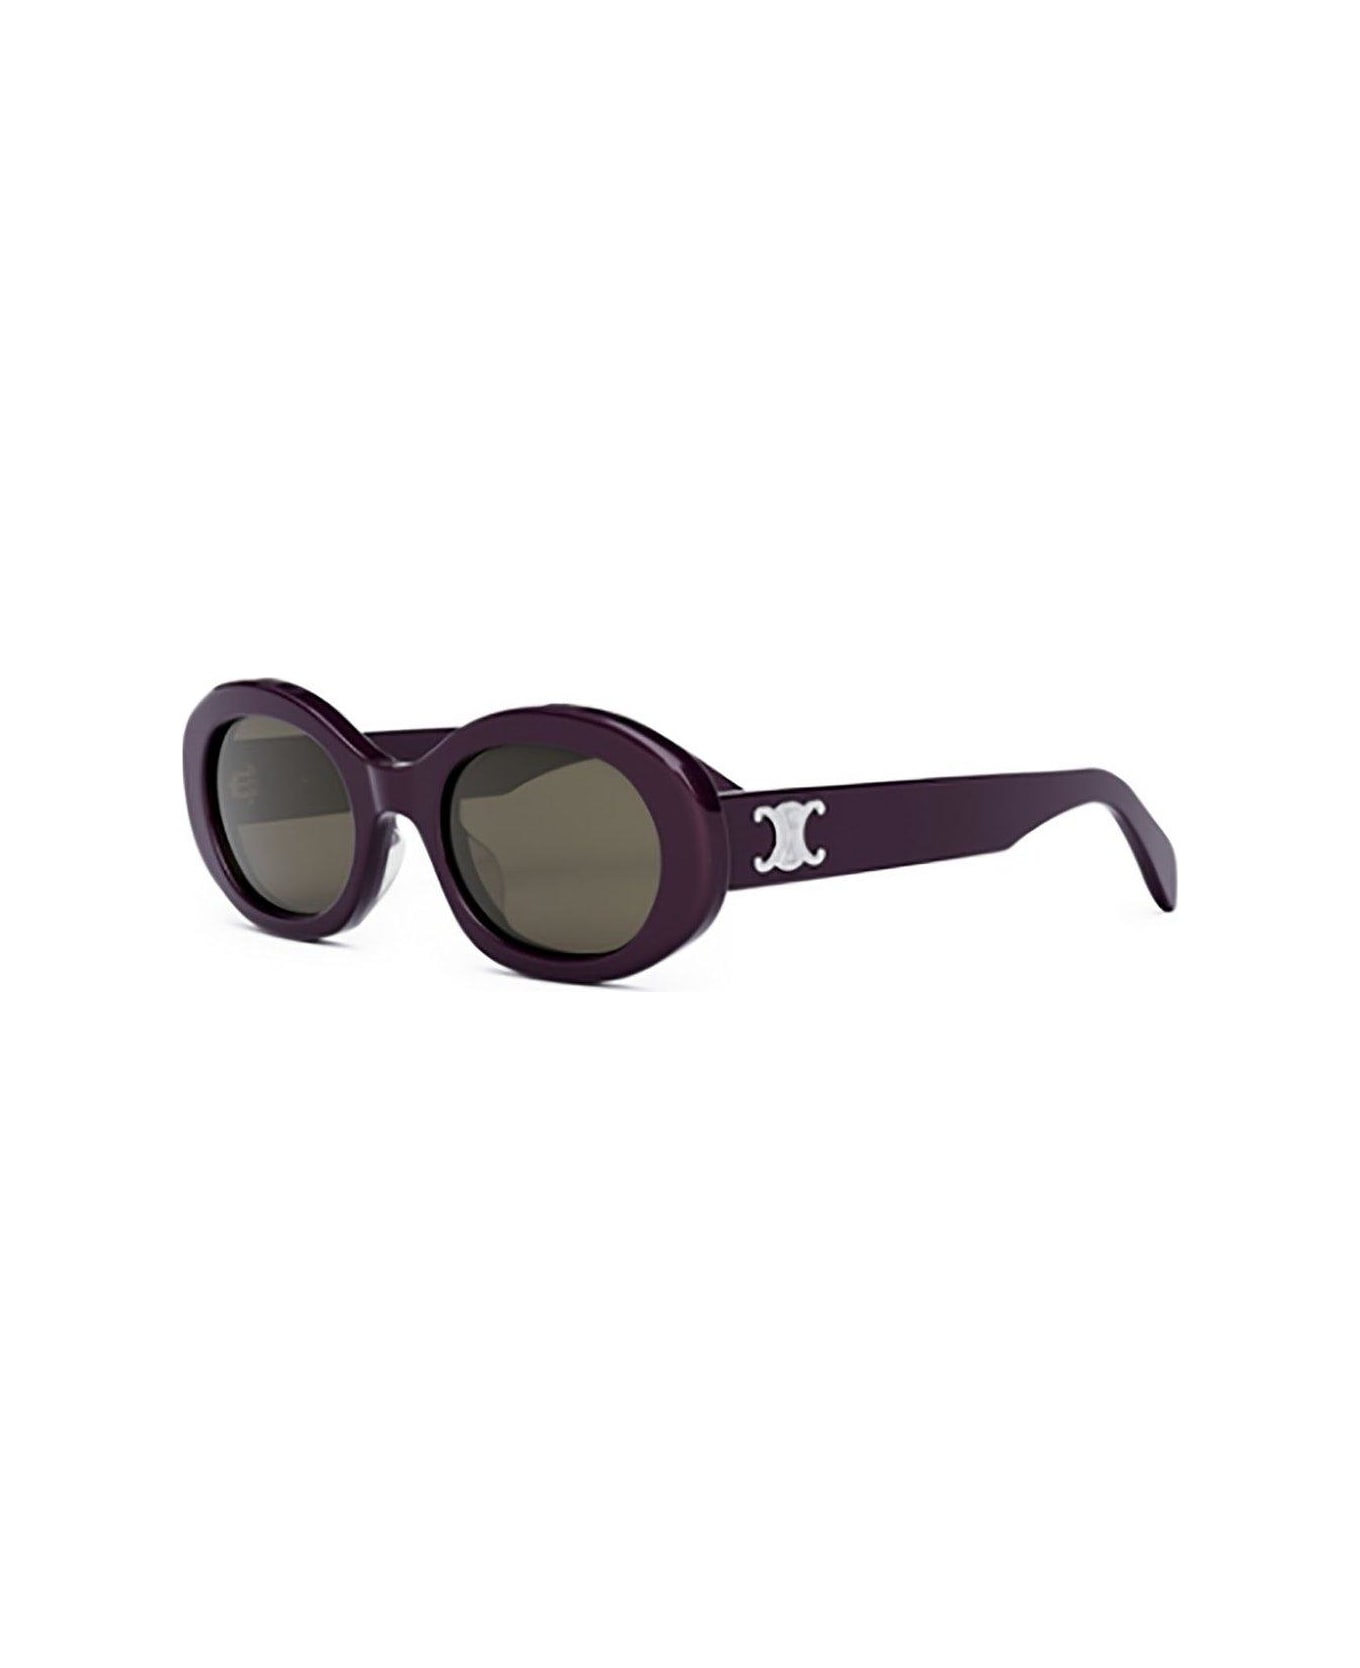 Celine Oval Frame Sunglasses - 81e